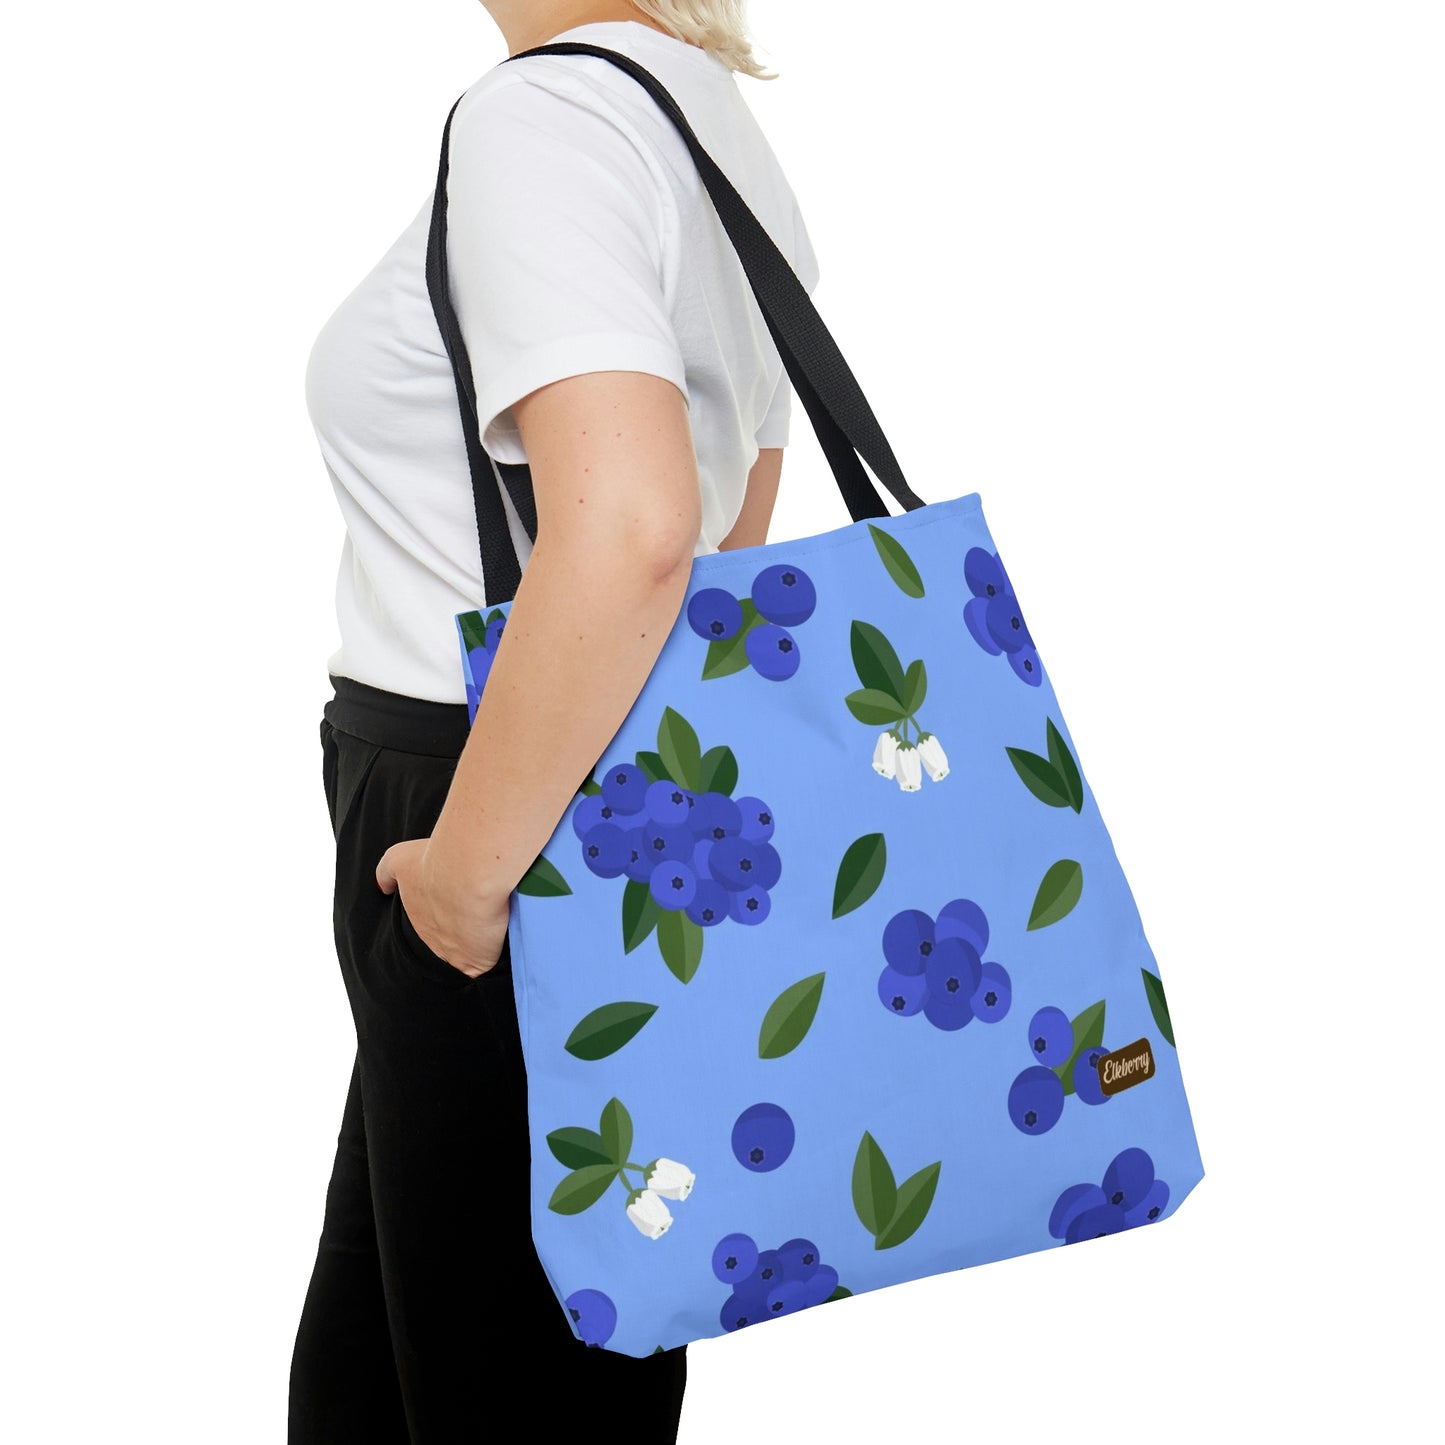 Lightweight Tote Bag - Blueberries